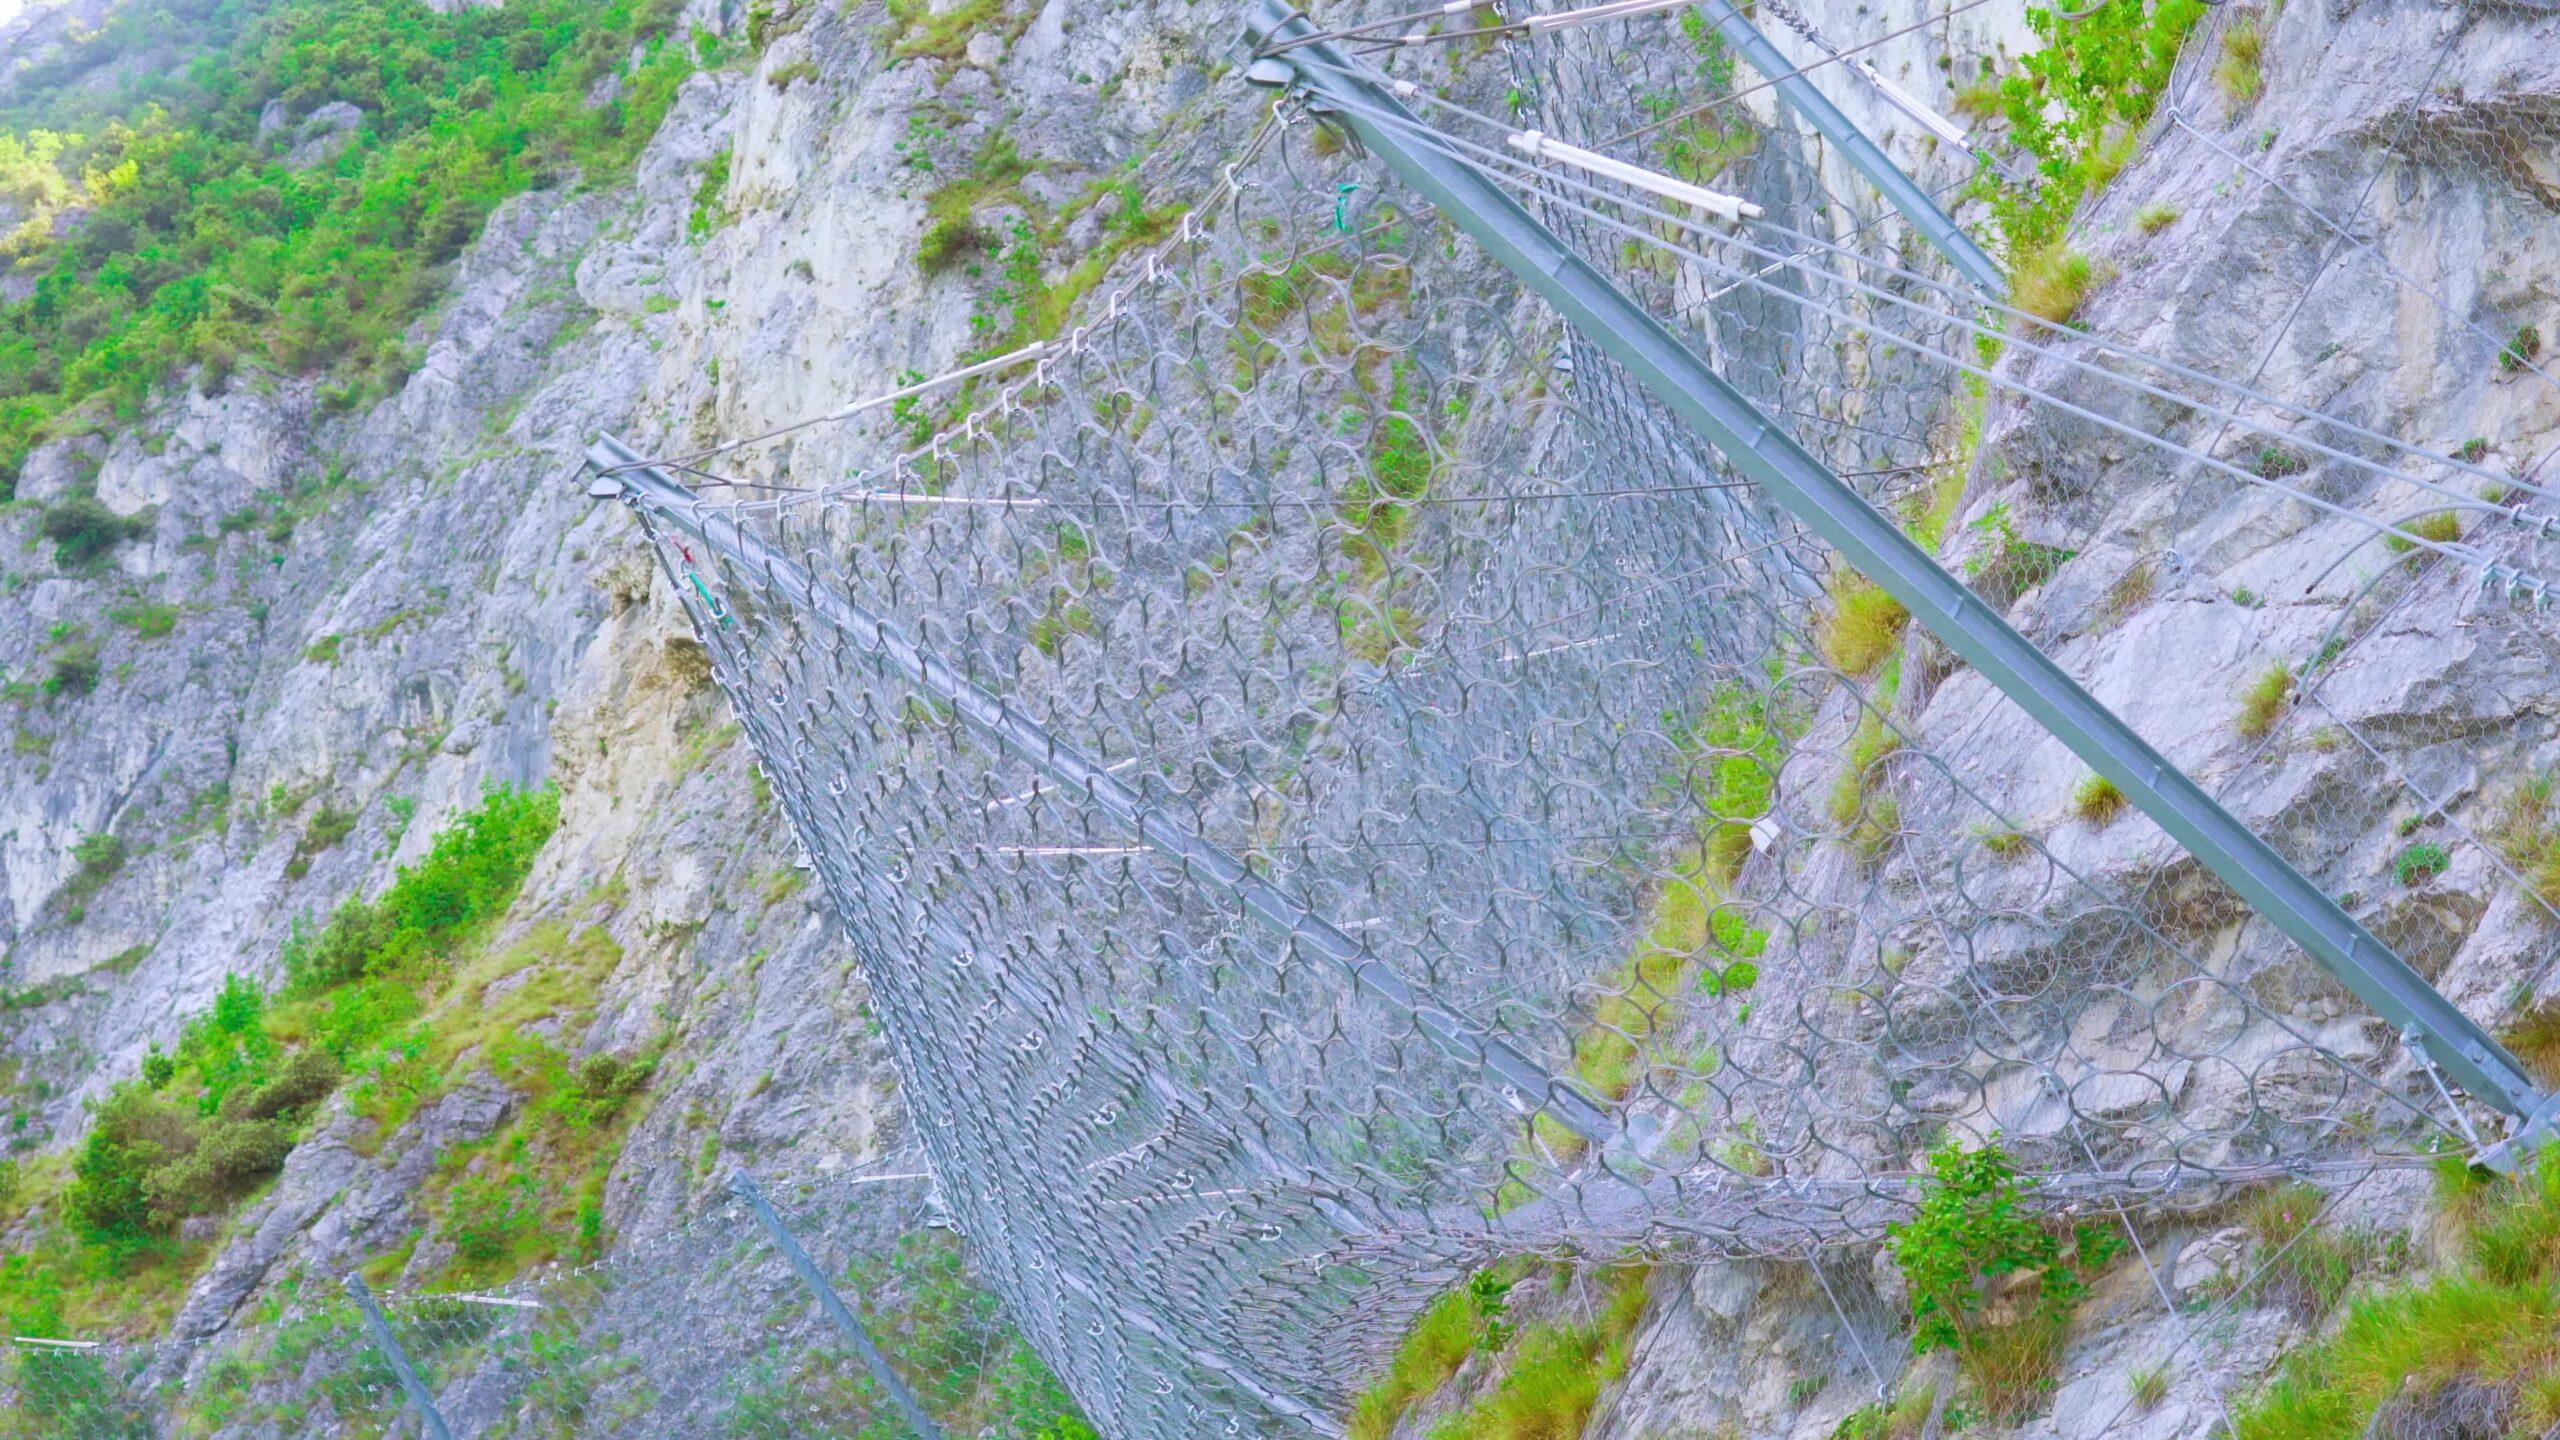 Metal mesh as protection against rock falls